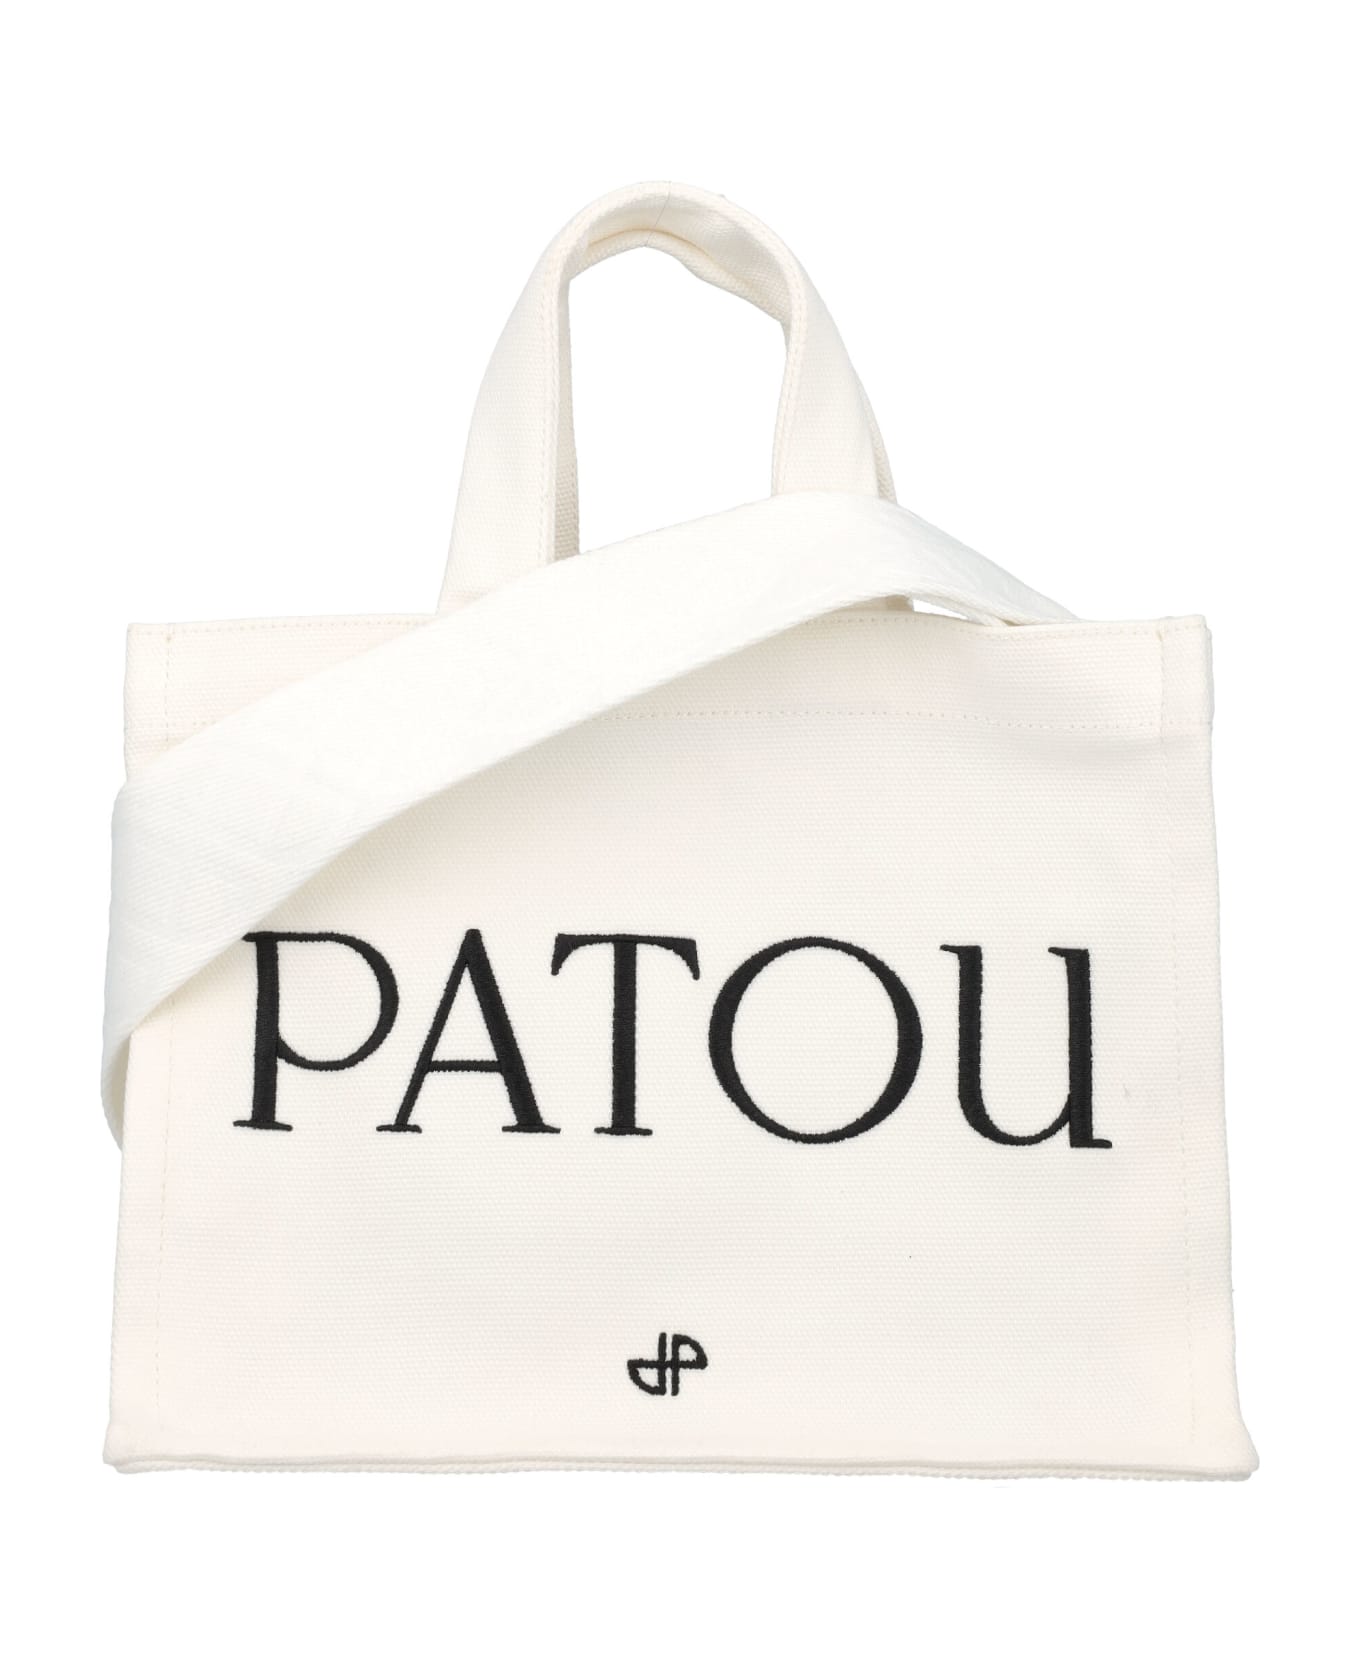 Patou Small Canvas Tote Bag - White